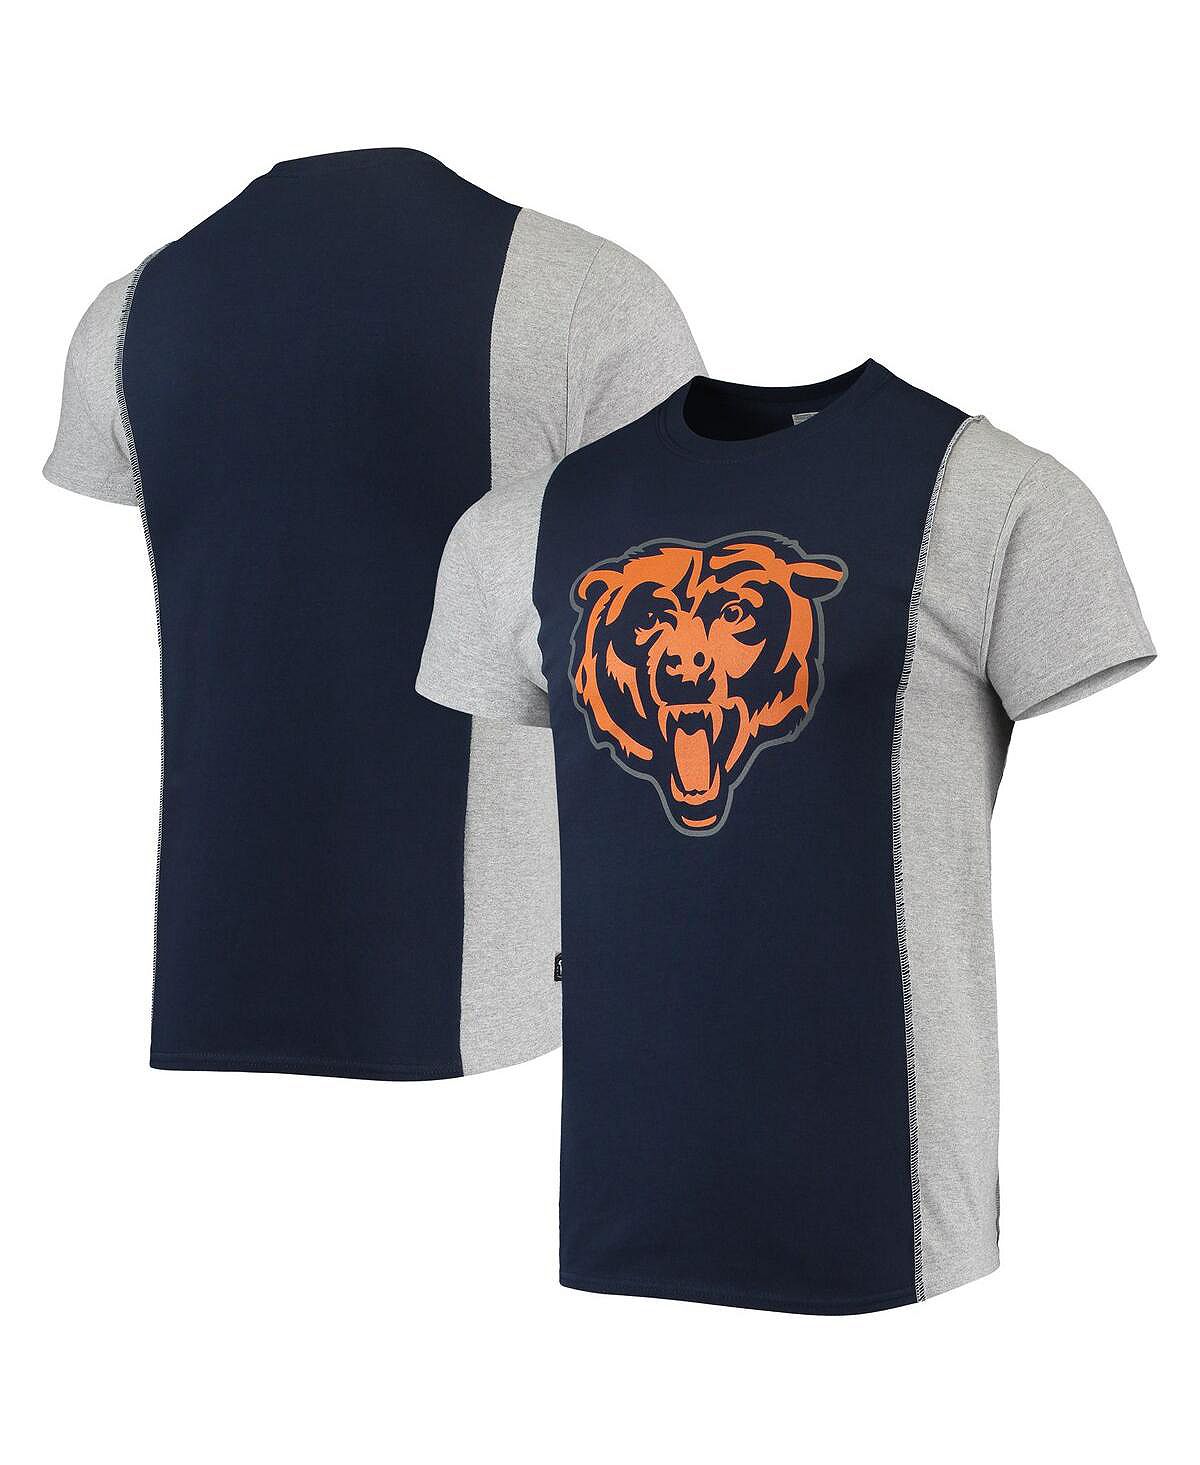 комплект футболок команды nfl team apparel для младенцев chicago bears redzone Мужская темно-синяя, меланжевая серая футболка с разрезом chicago bears Refried Apparel, мульти